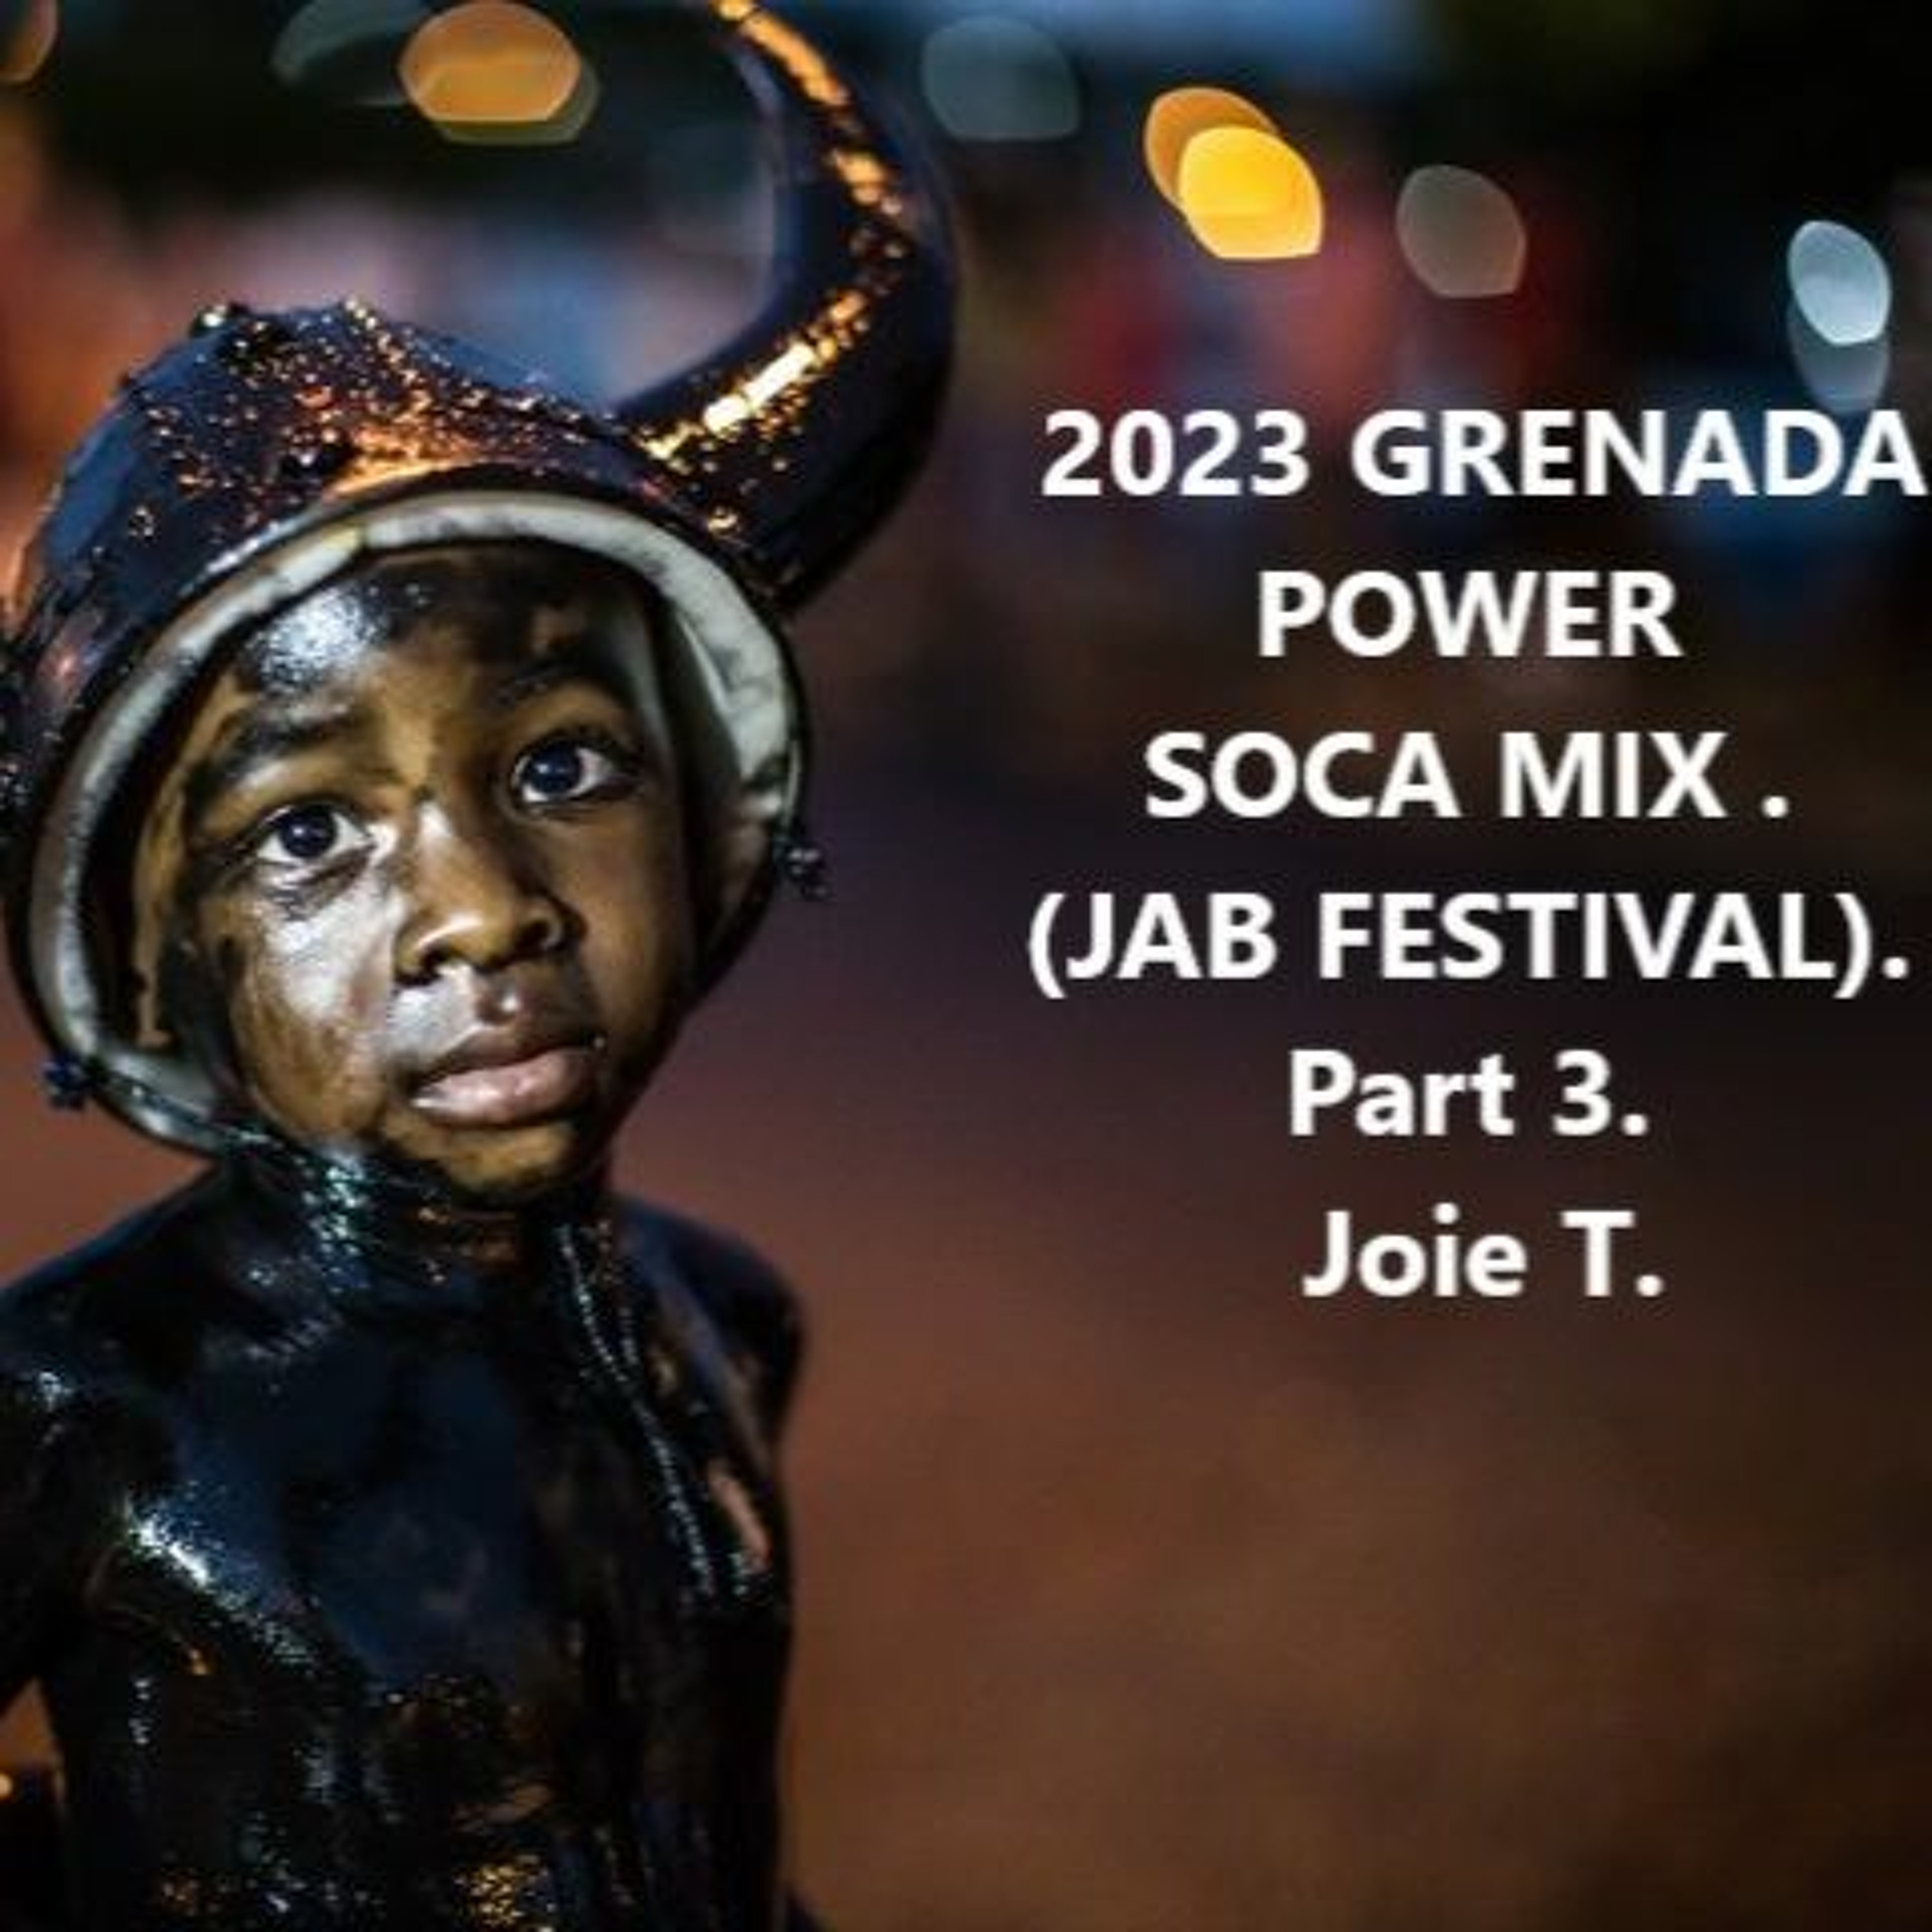 2023 GRENADA POWER SOCA MIX (JAB FESTIVAL) - Part 3 - Joie T